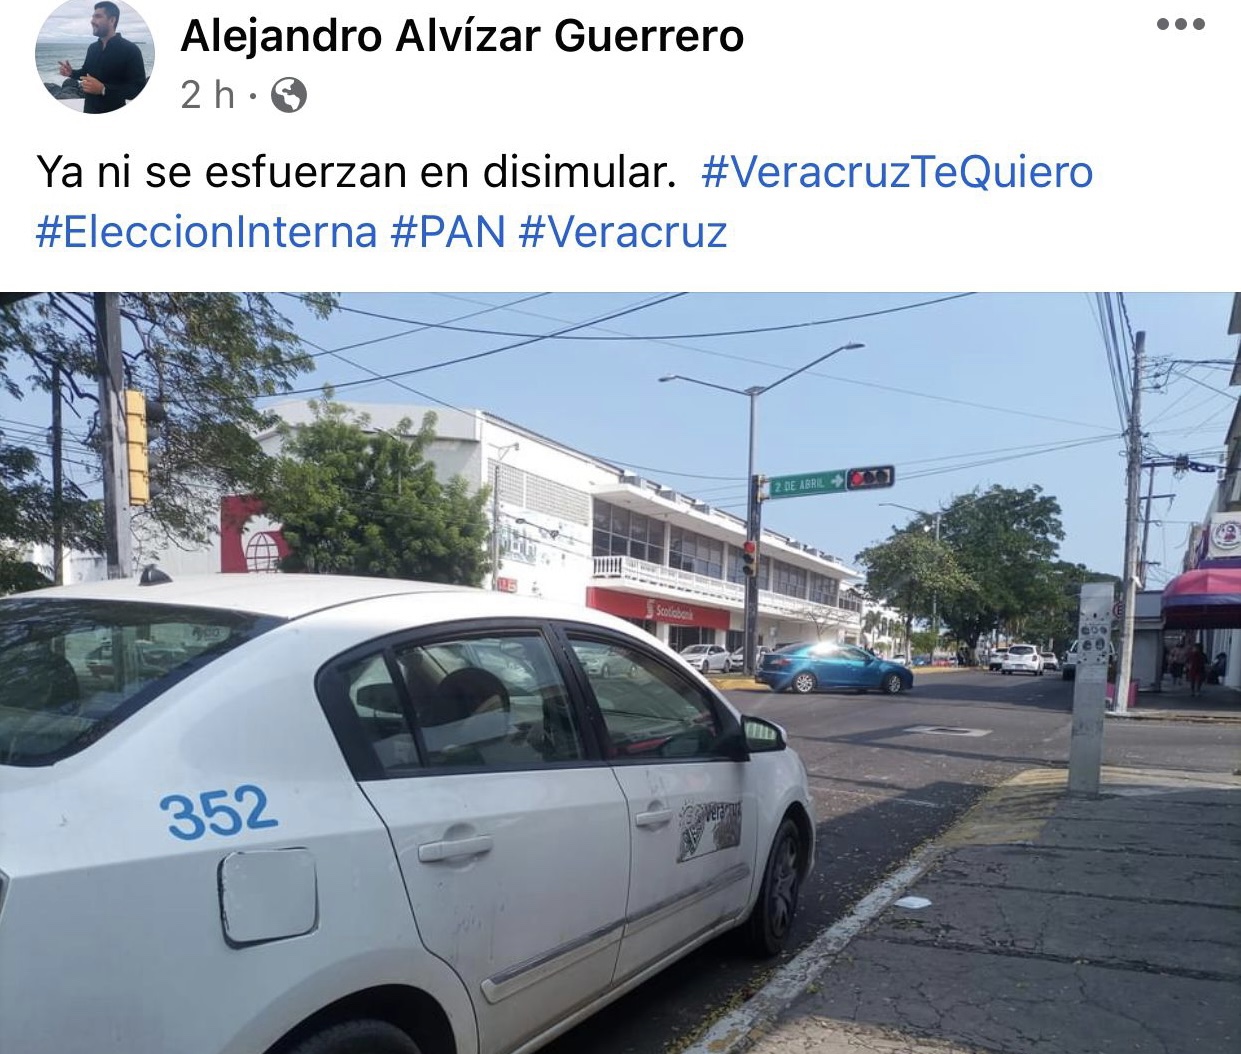 Alcalde de Veracruz acarreó votantes para elección panista en autos oficiales, acusa Alejandro Alvizar